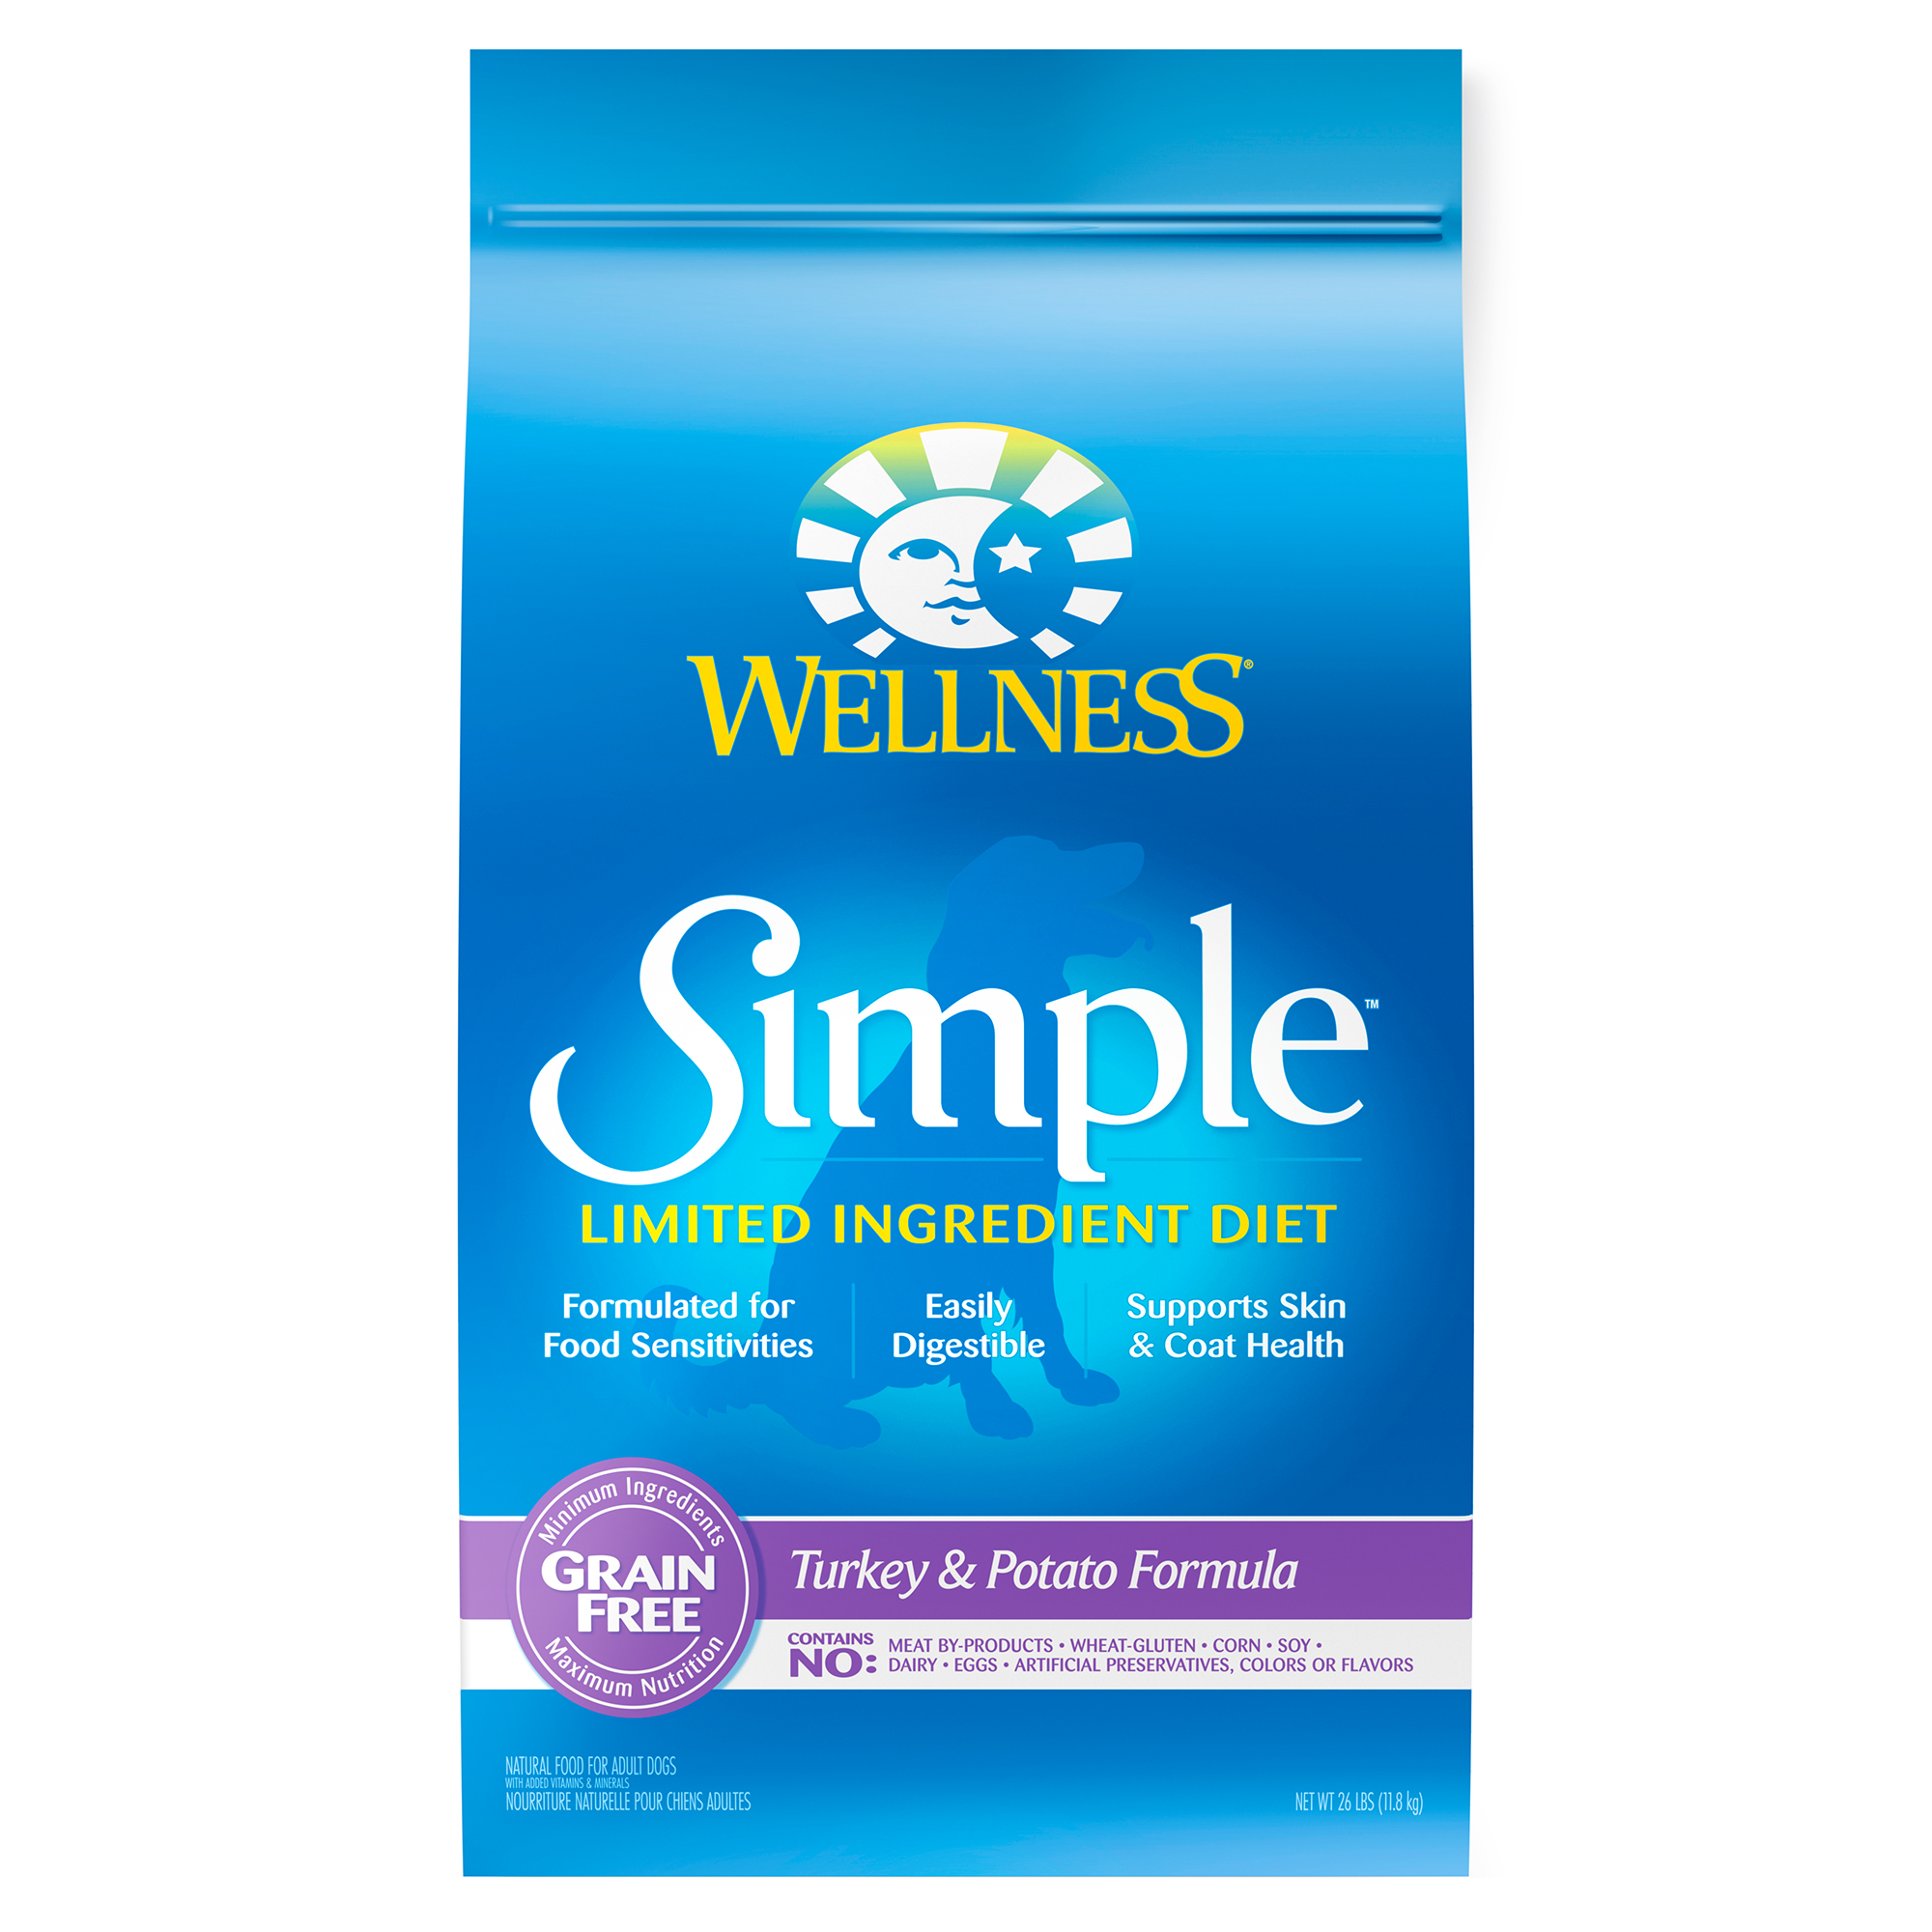 Wellness Simple Natural Grain Free Limited Ingredient Dry Dog Food, Turkey & Potato Recipe, 26lb Bag - image 1 of 6